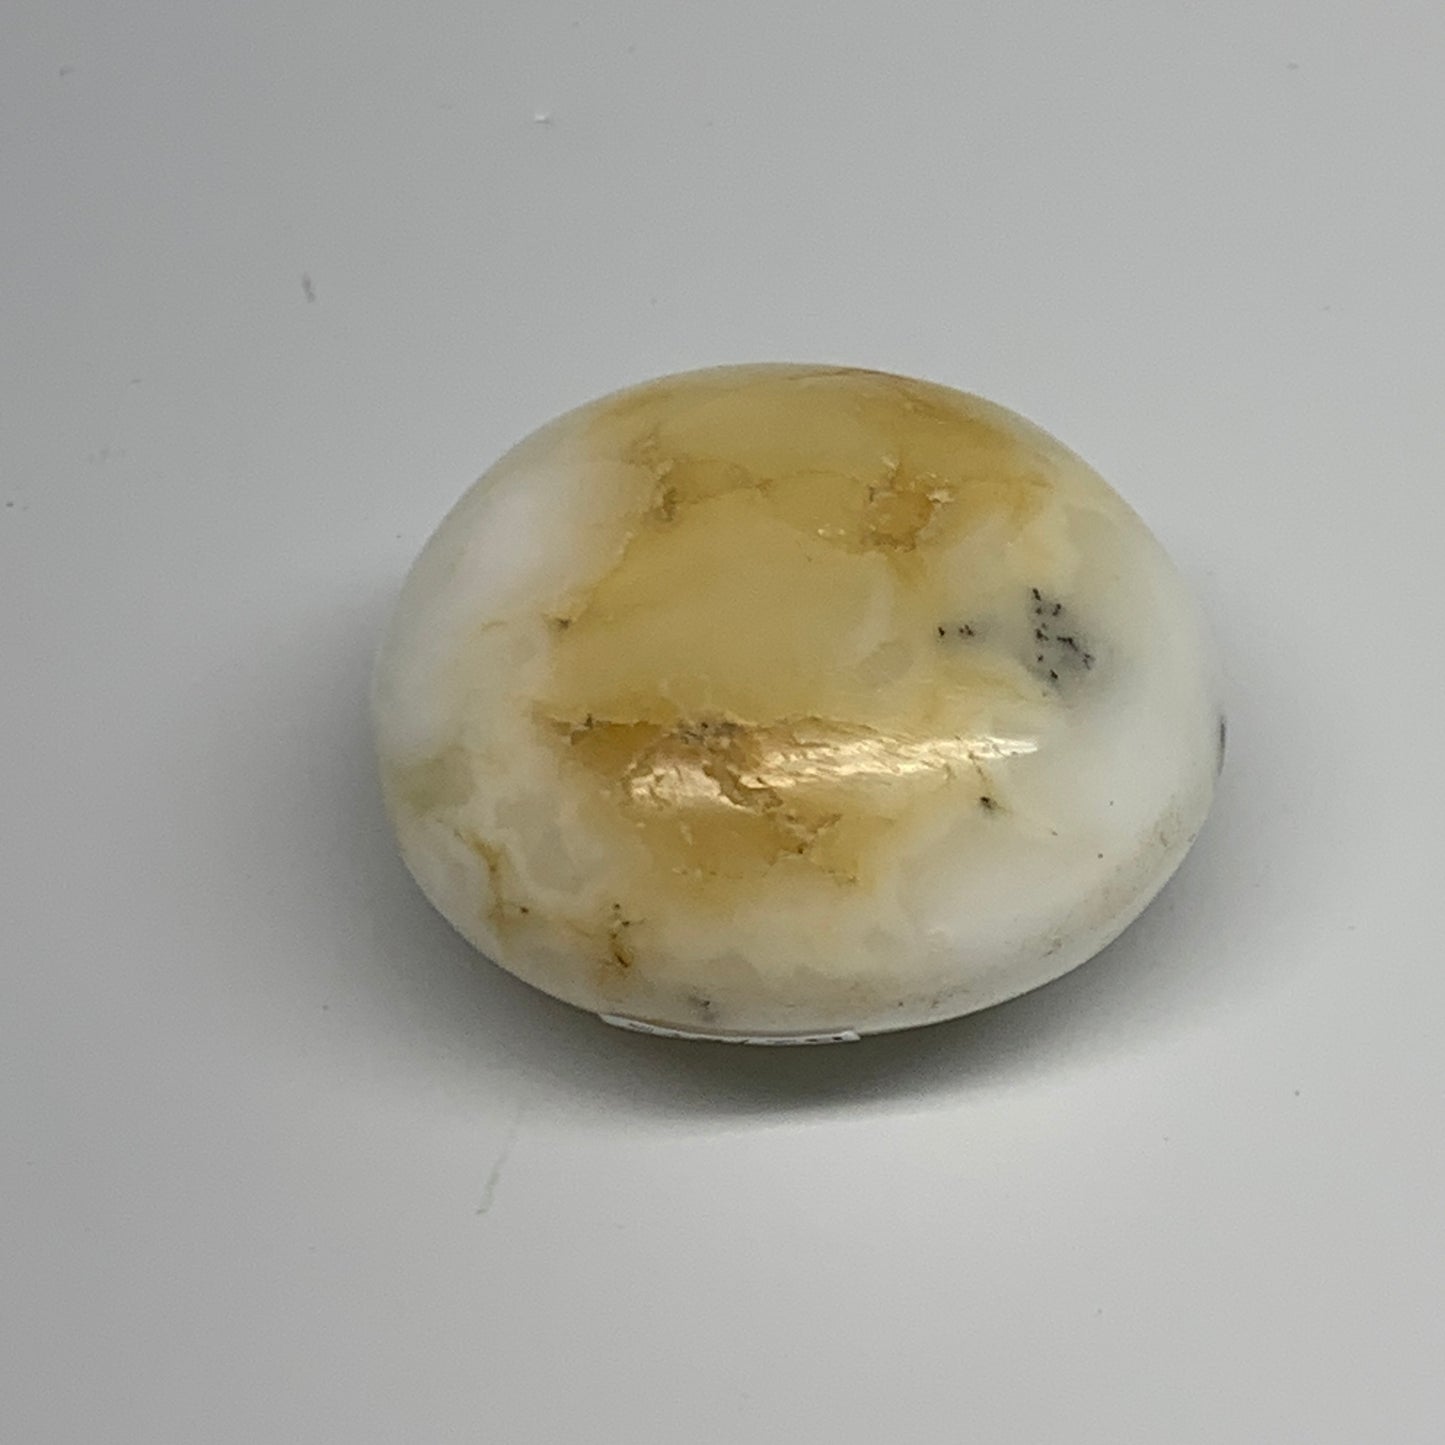 91.2g, 2"x2"x1.2", Dendrite Opal Palm-Stone Reiki Energy Crystal, B27815